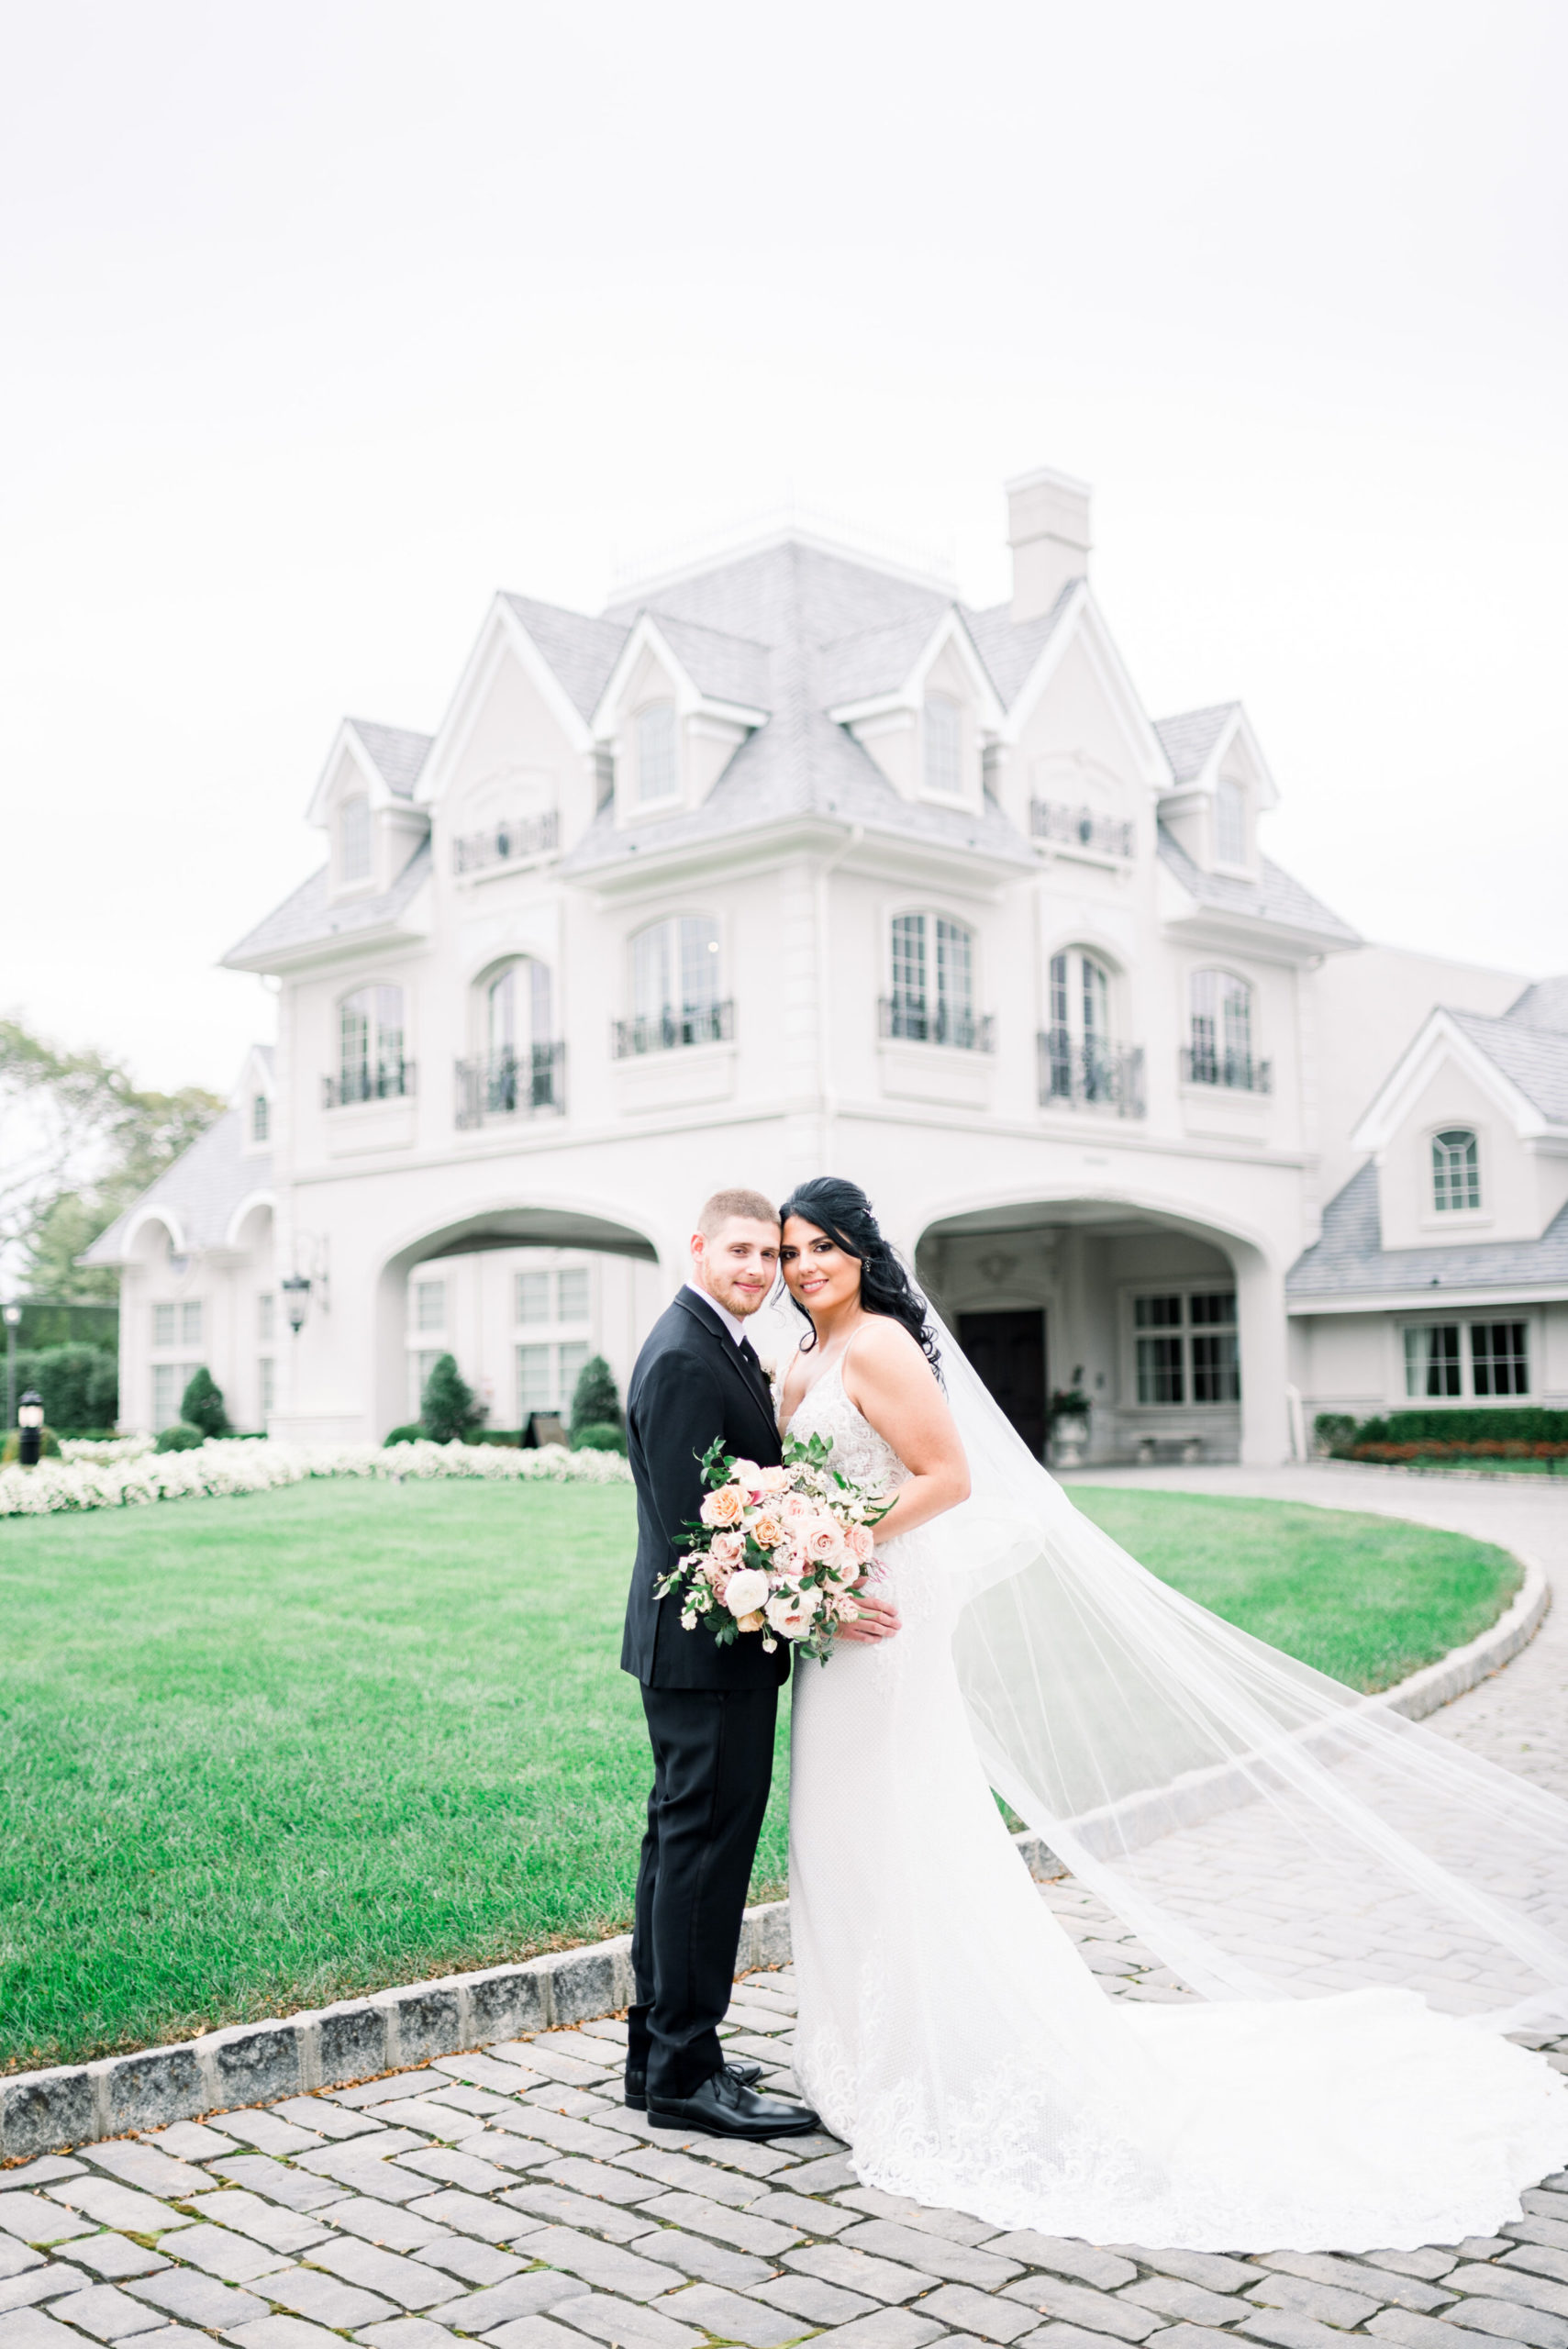 My Top 3 Favorite Wedding Venues in New Jersey: NJ wedding photographer Myra Roman shares three romantic wedding venues in Jersey